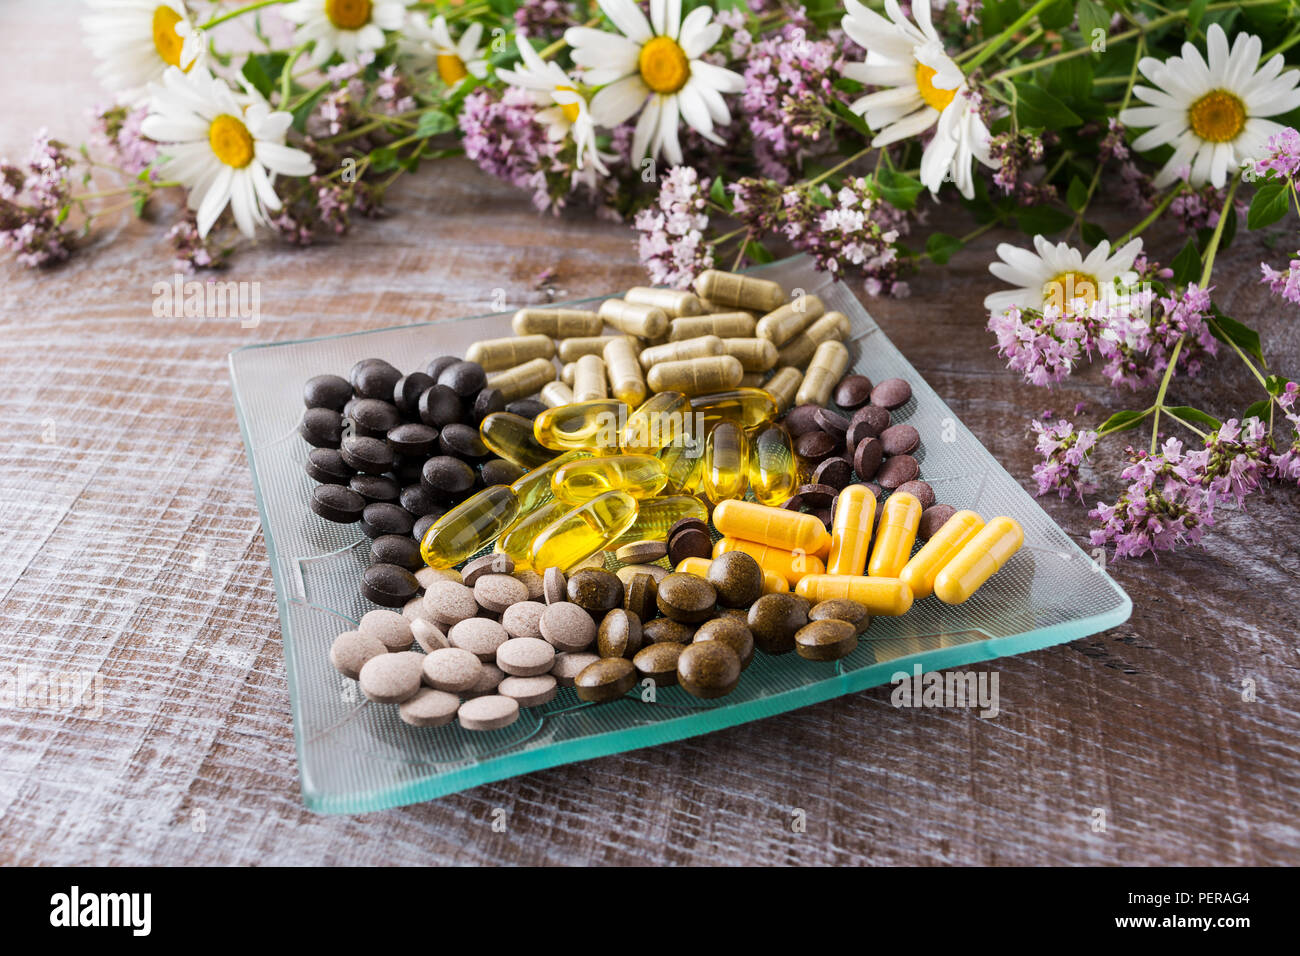 Pastilla de aceite de orégano fotografías e imágenes de alta resolución -  Alamy